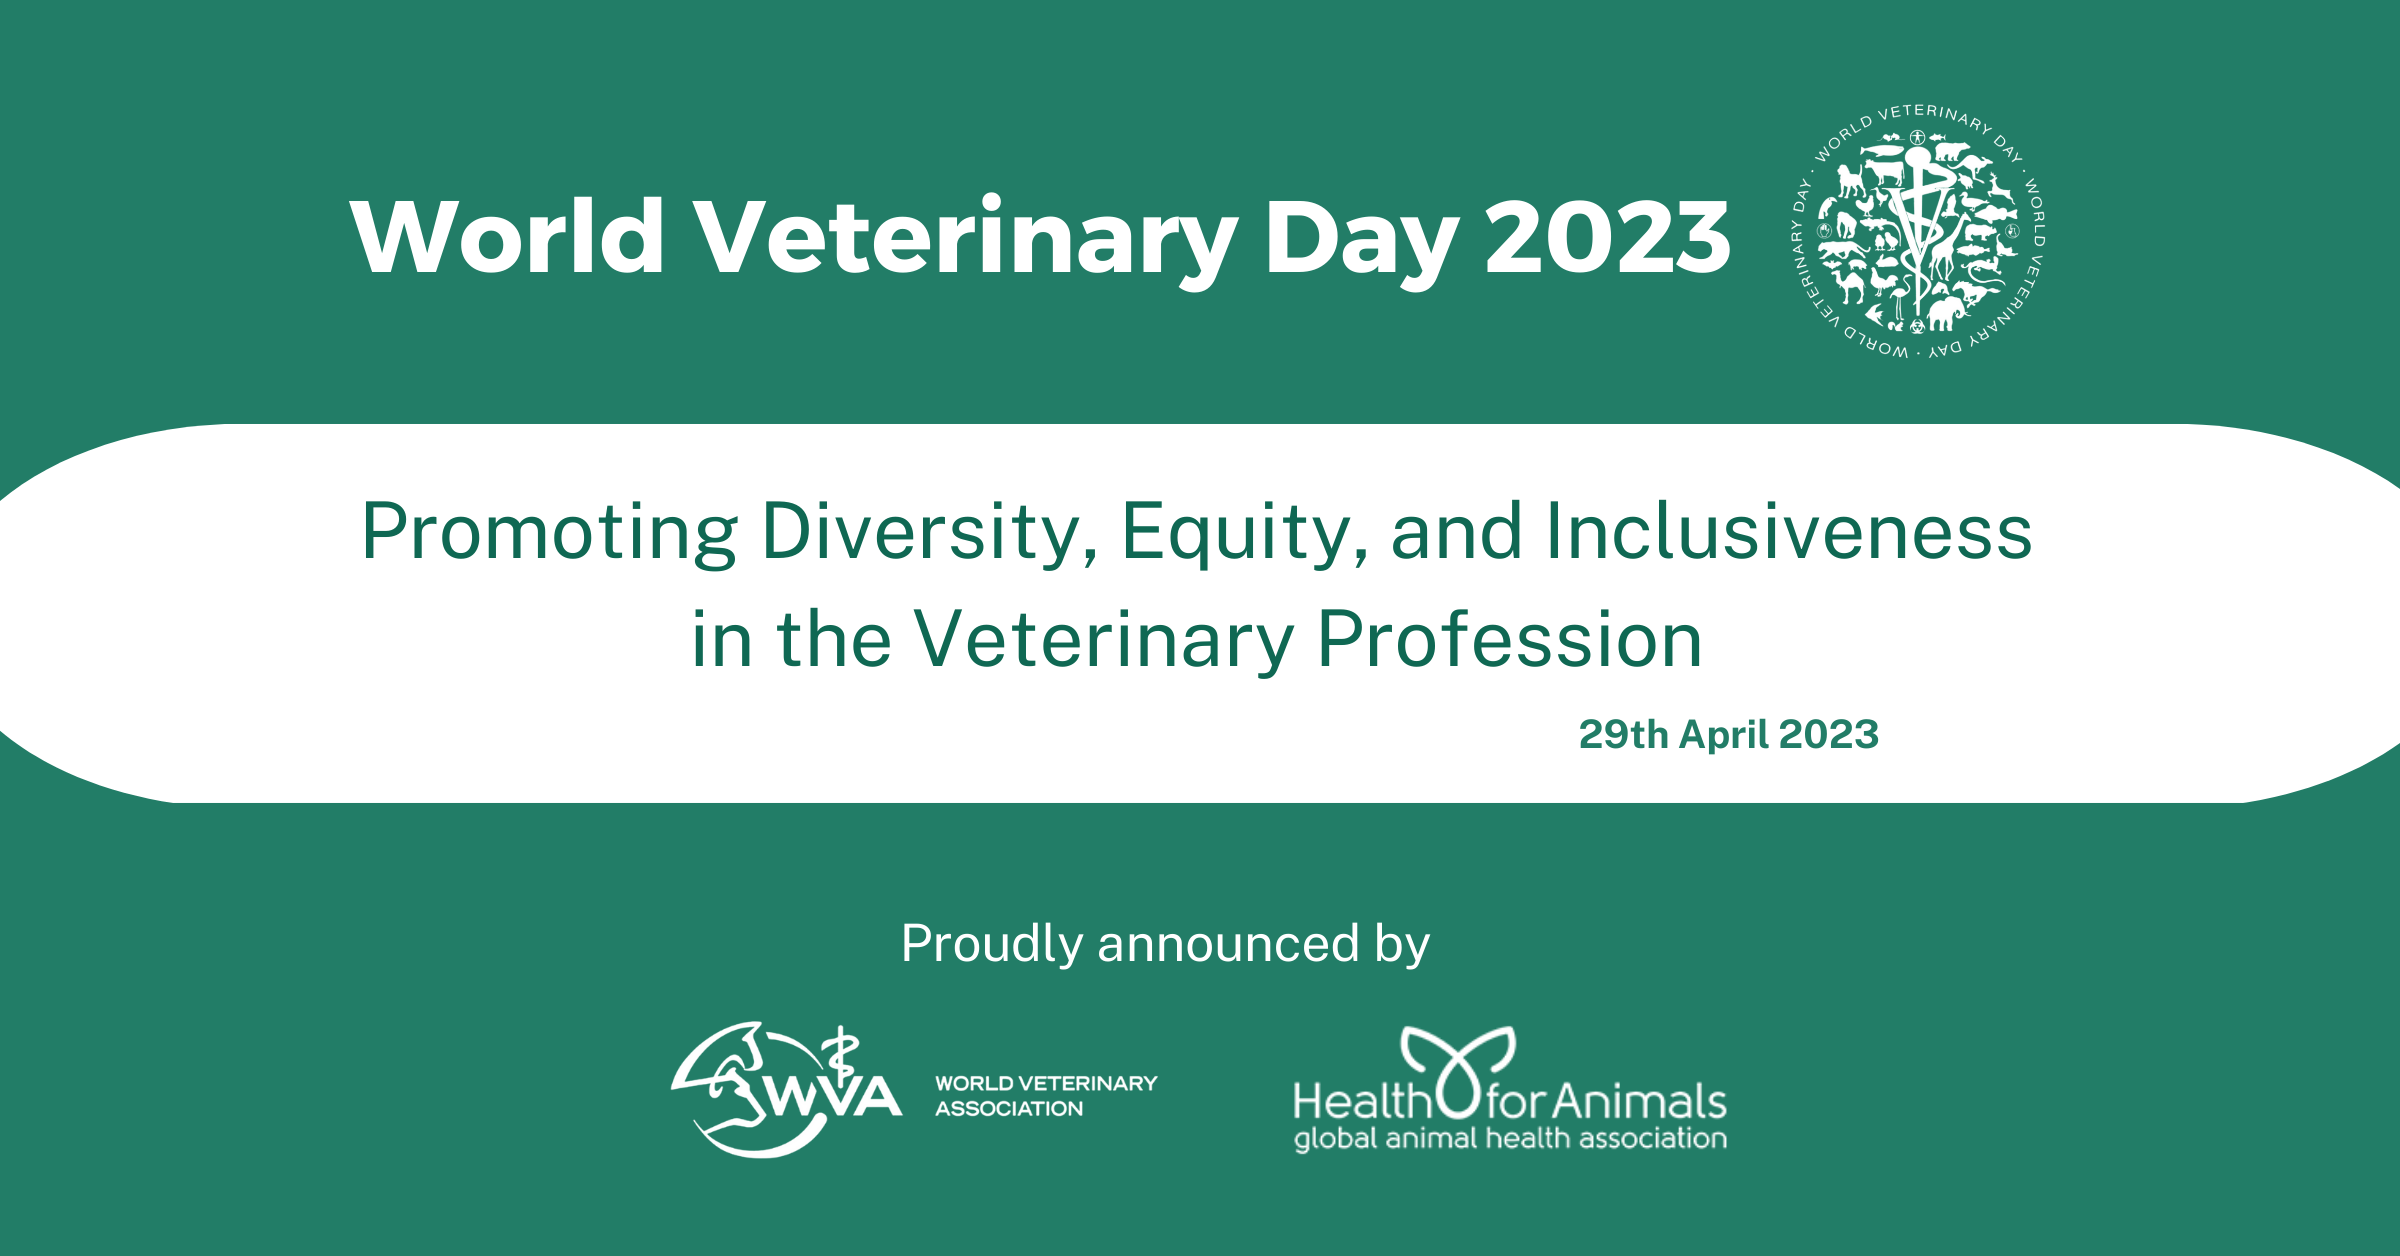 World Veterinary Day 2023 today